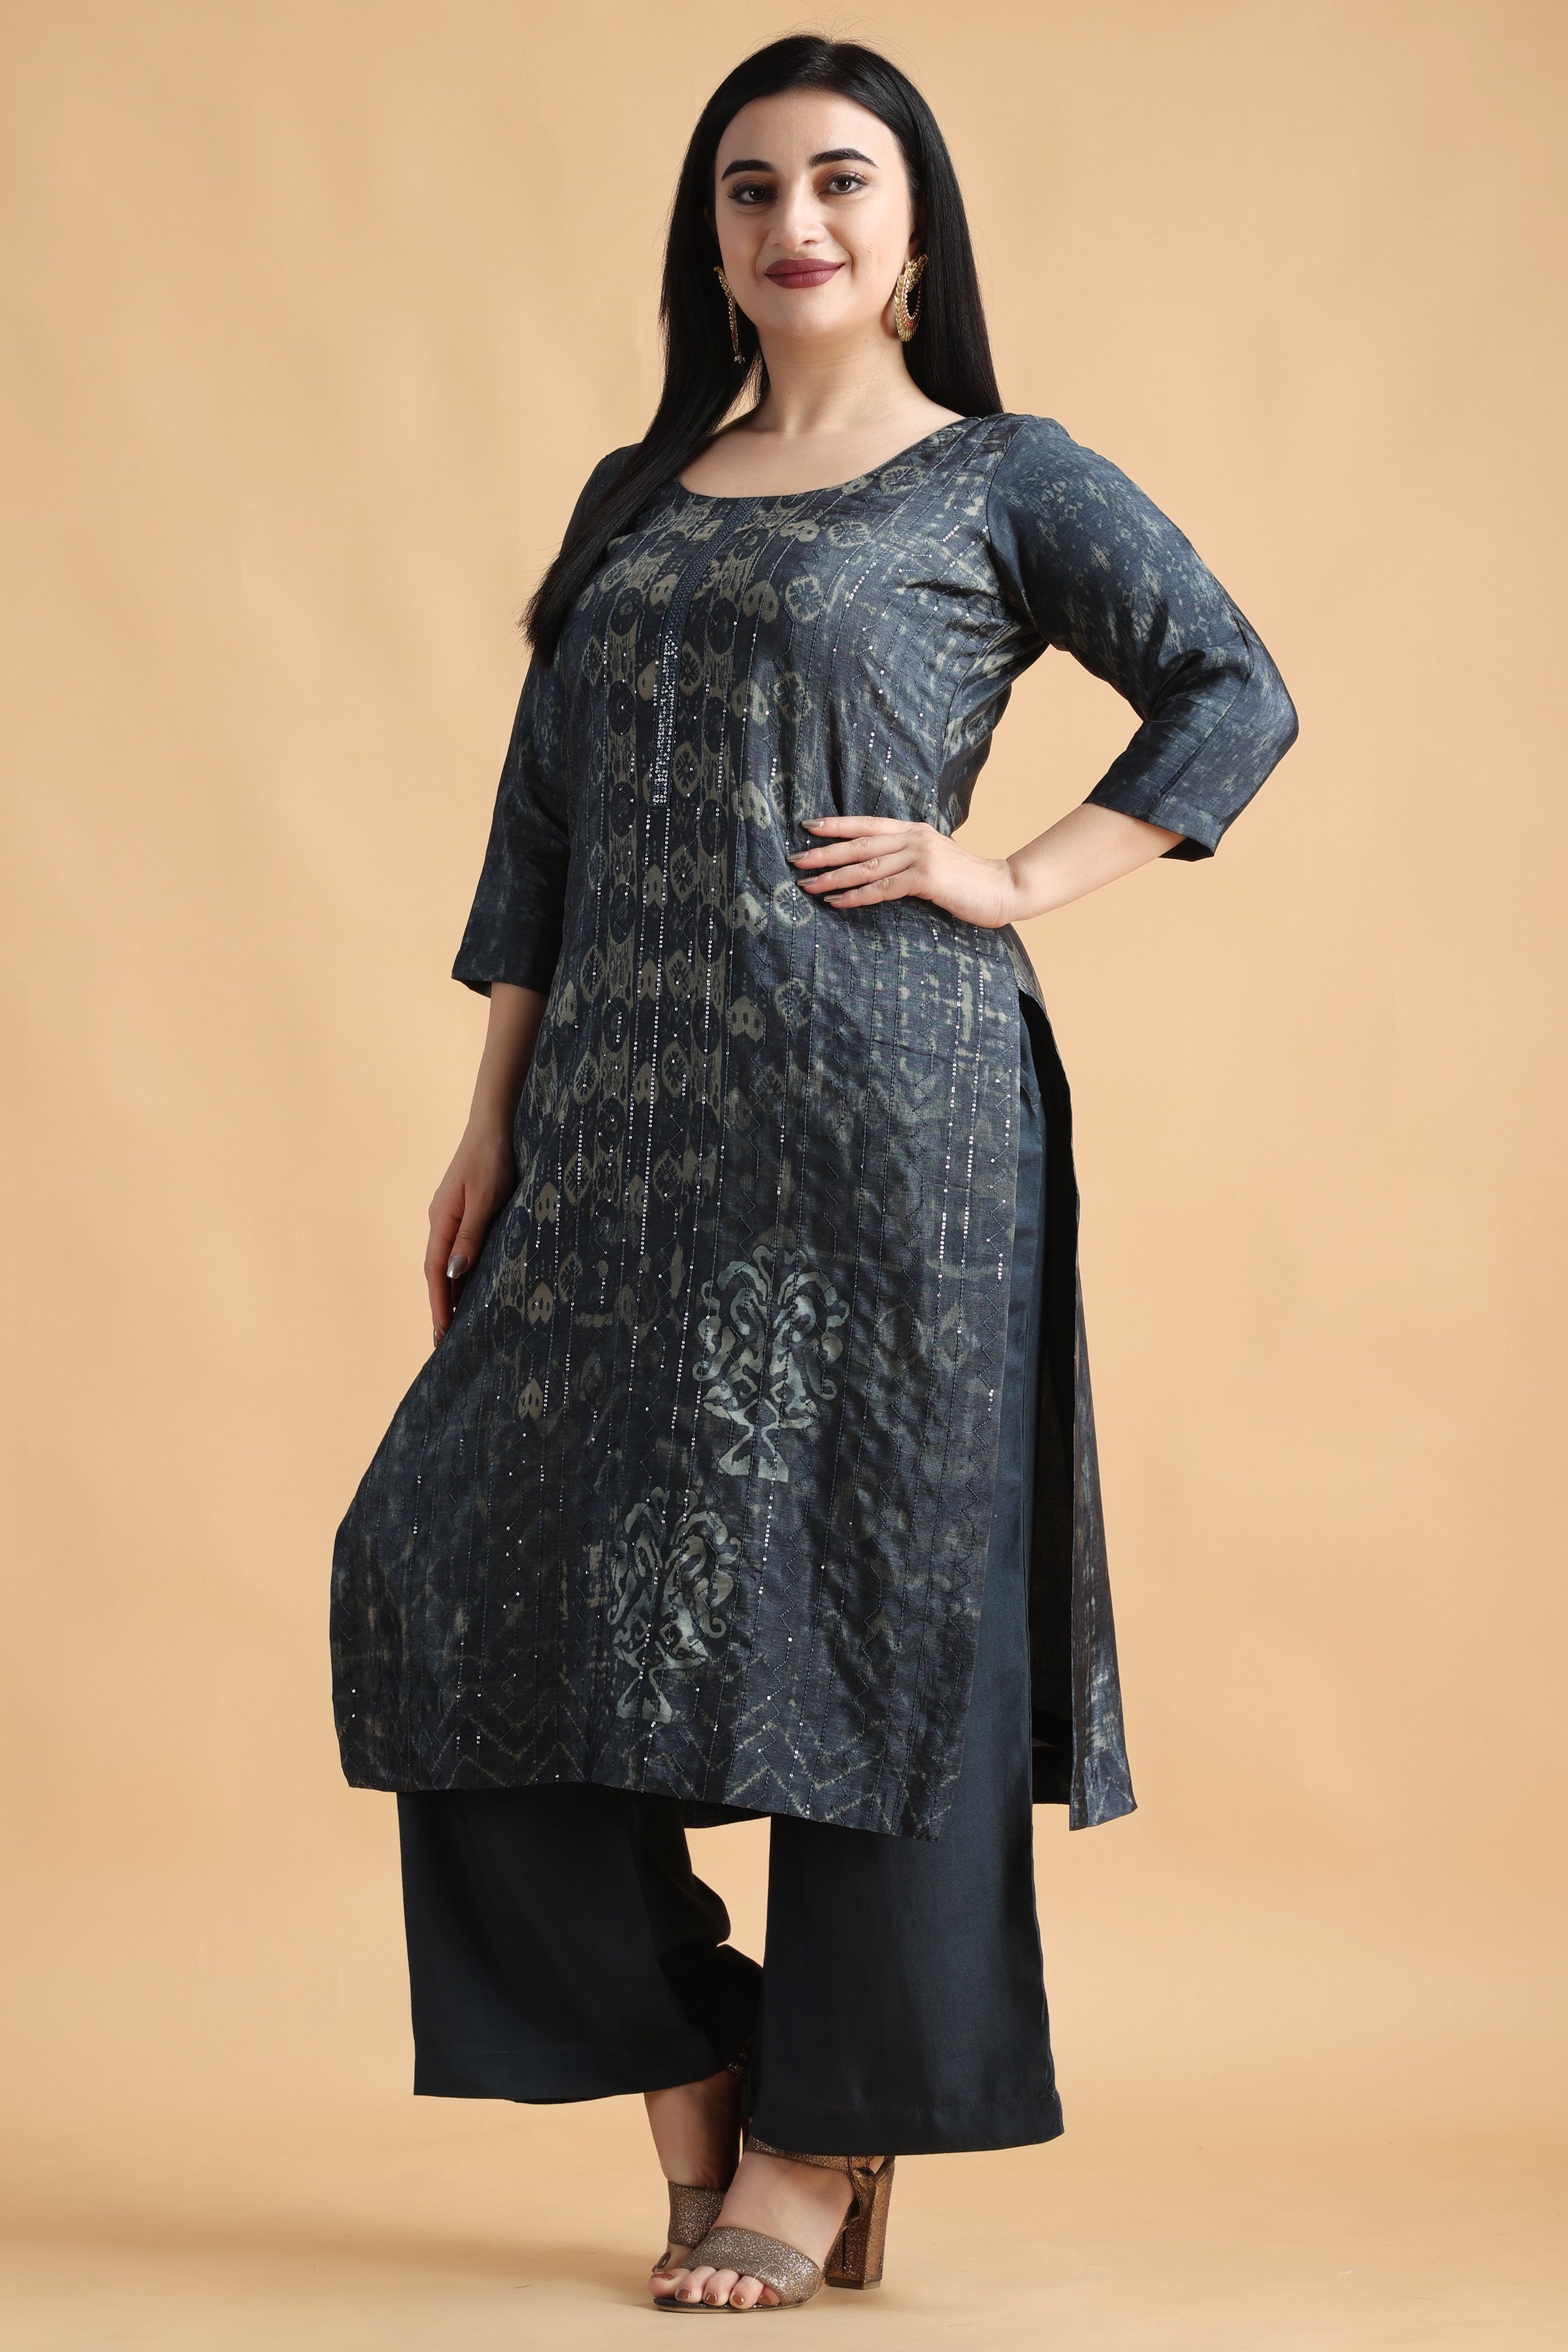 KCRT_1629 | Ladies suits indian, Ladies suit design, India clothes